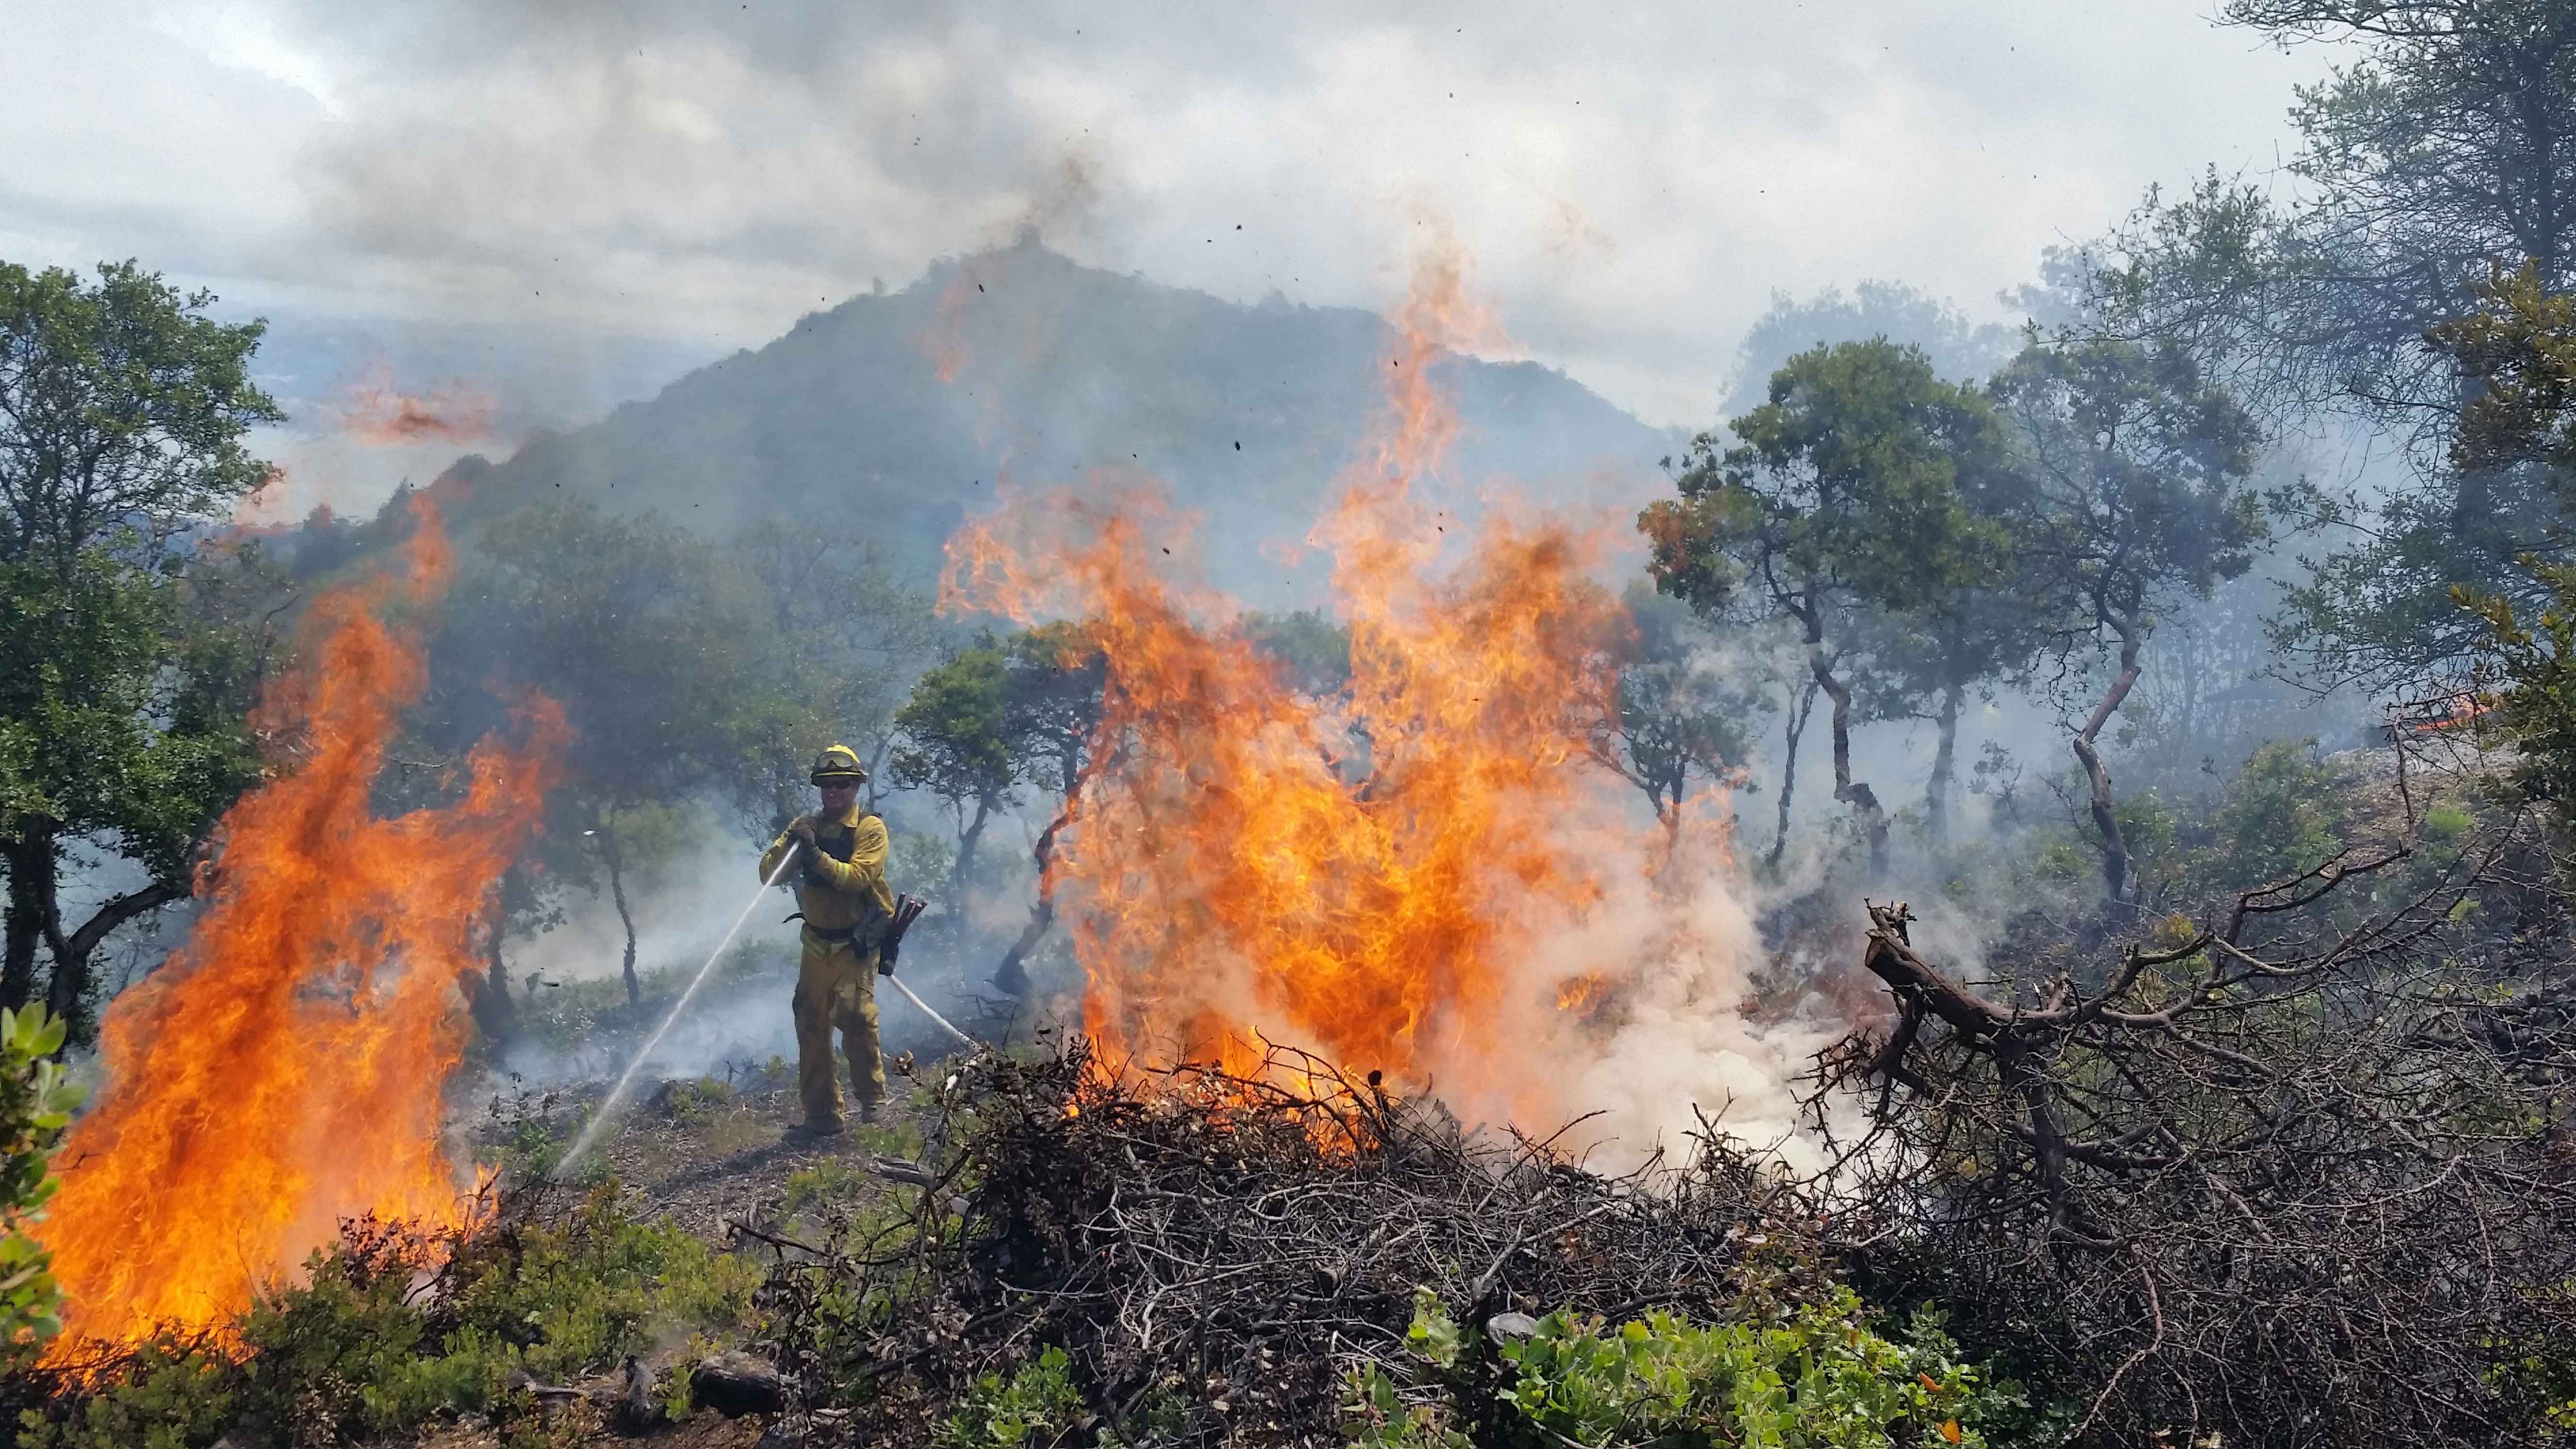 On Mt. Tam, a prescribed burn decreases fuel loads in chaparral and scrub oak communities. 